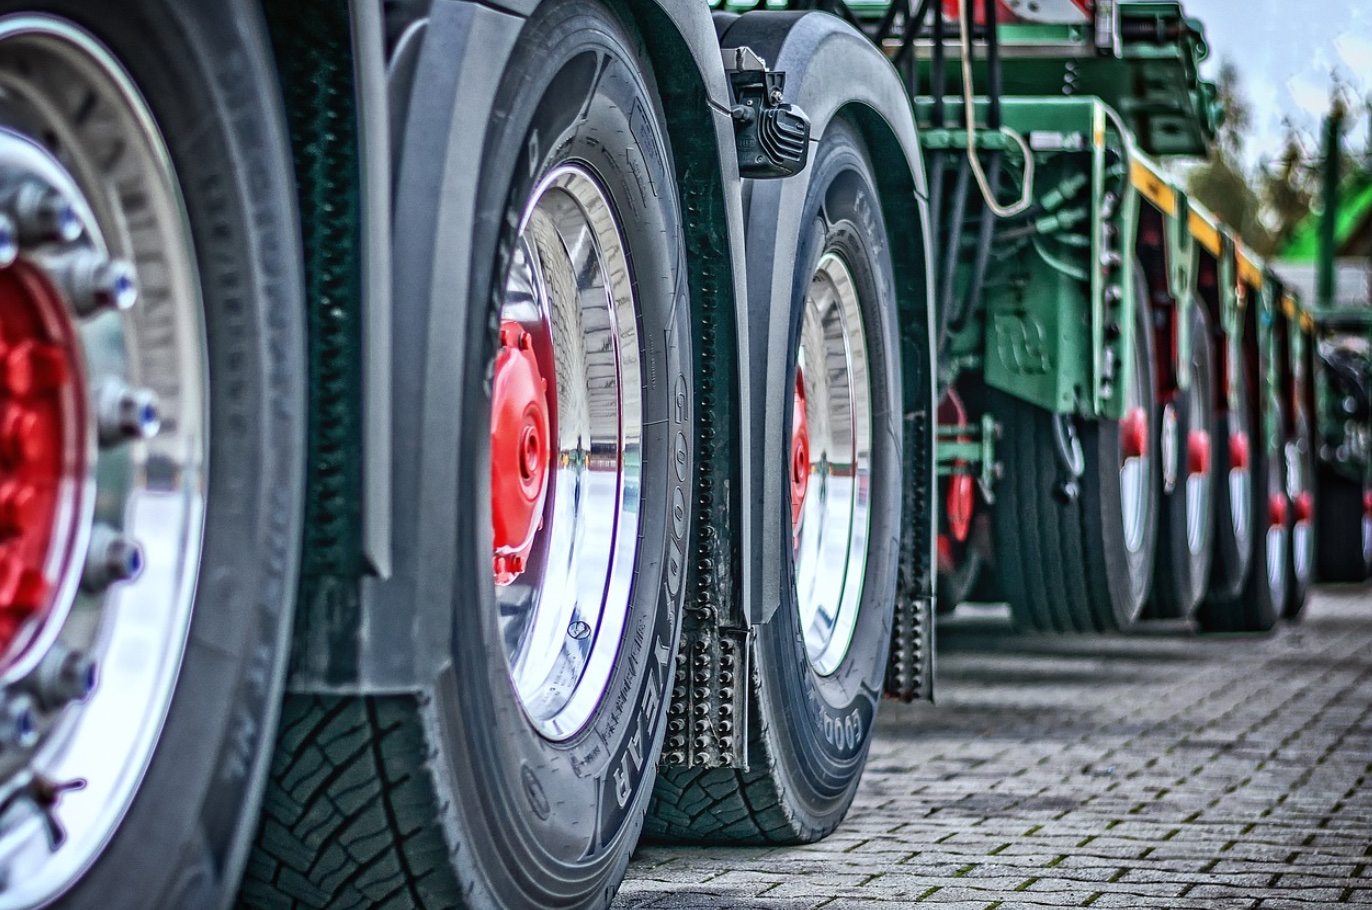 Heavy load tractor pulling semi-truck; image by Tama66, via Pixabay.com.